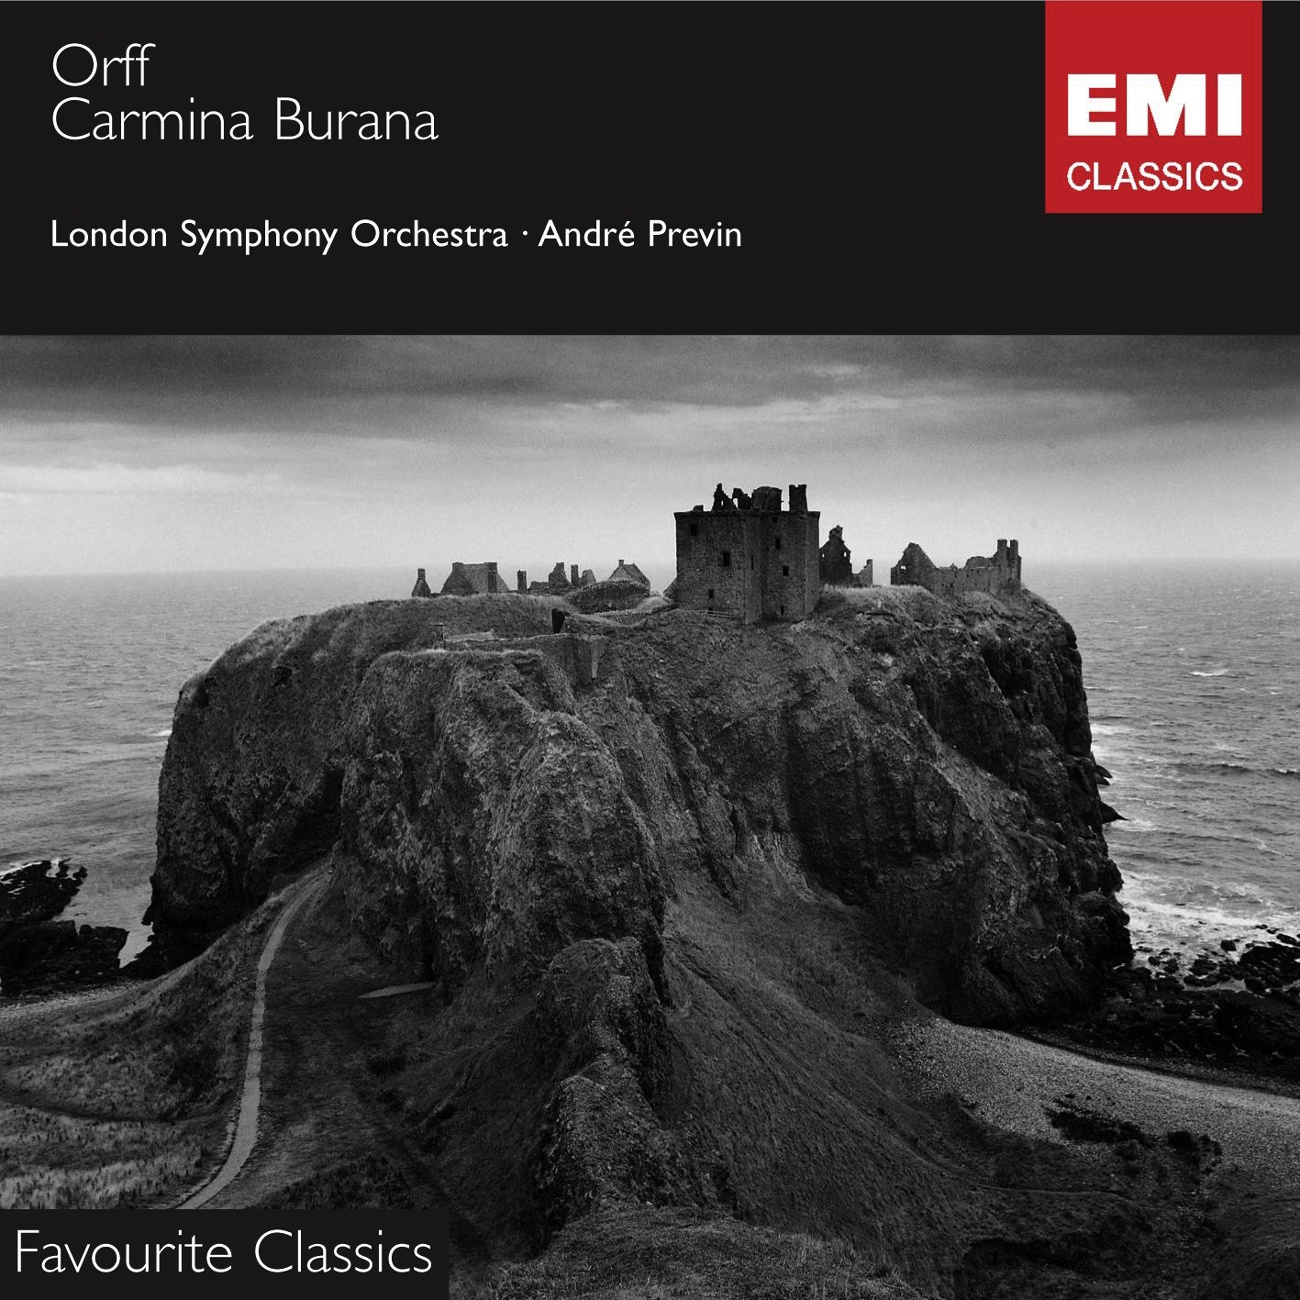 Carmina Burana - Cantiones profanae (1997 Digital Remaster), III - Cours d'amour: No. 22 - Tempus est iocundum